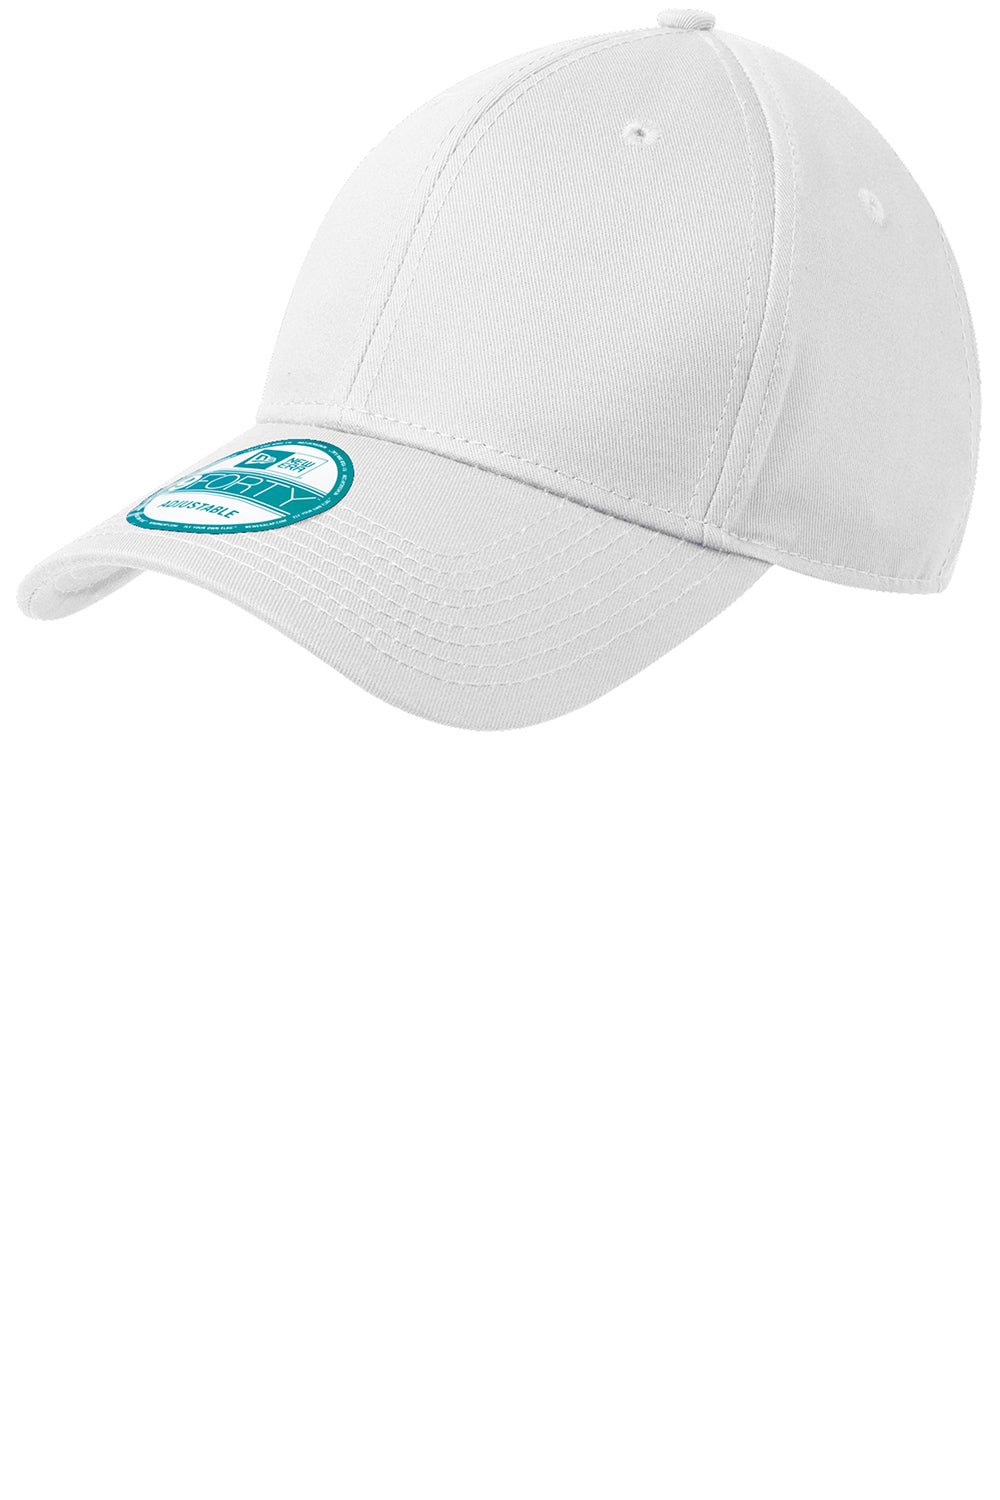 New Era NE200 Mens Adjustable Hat White Front